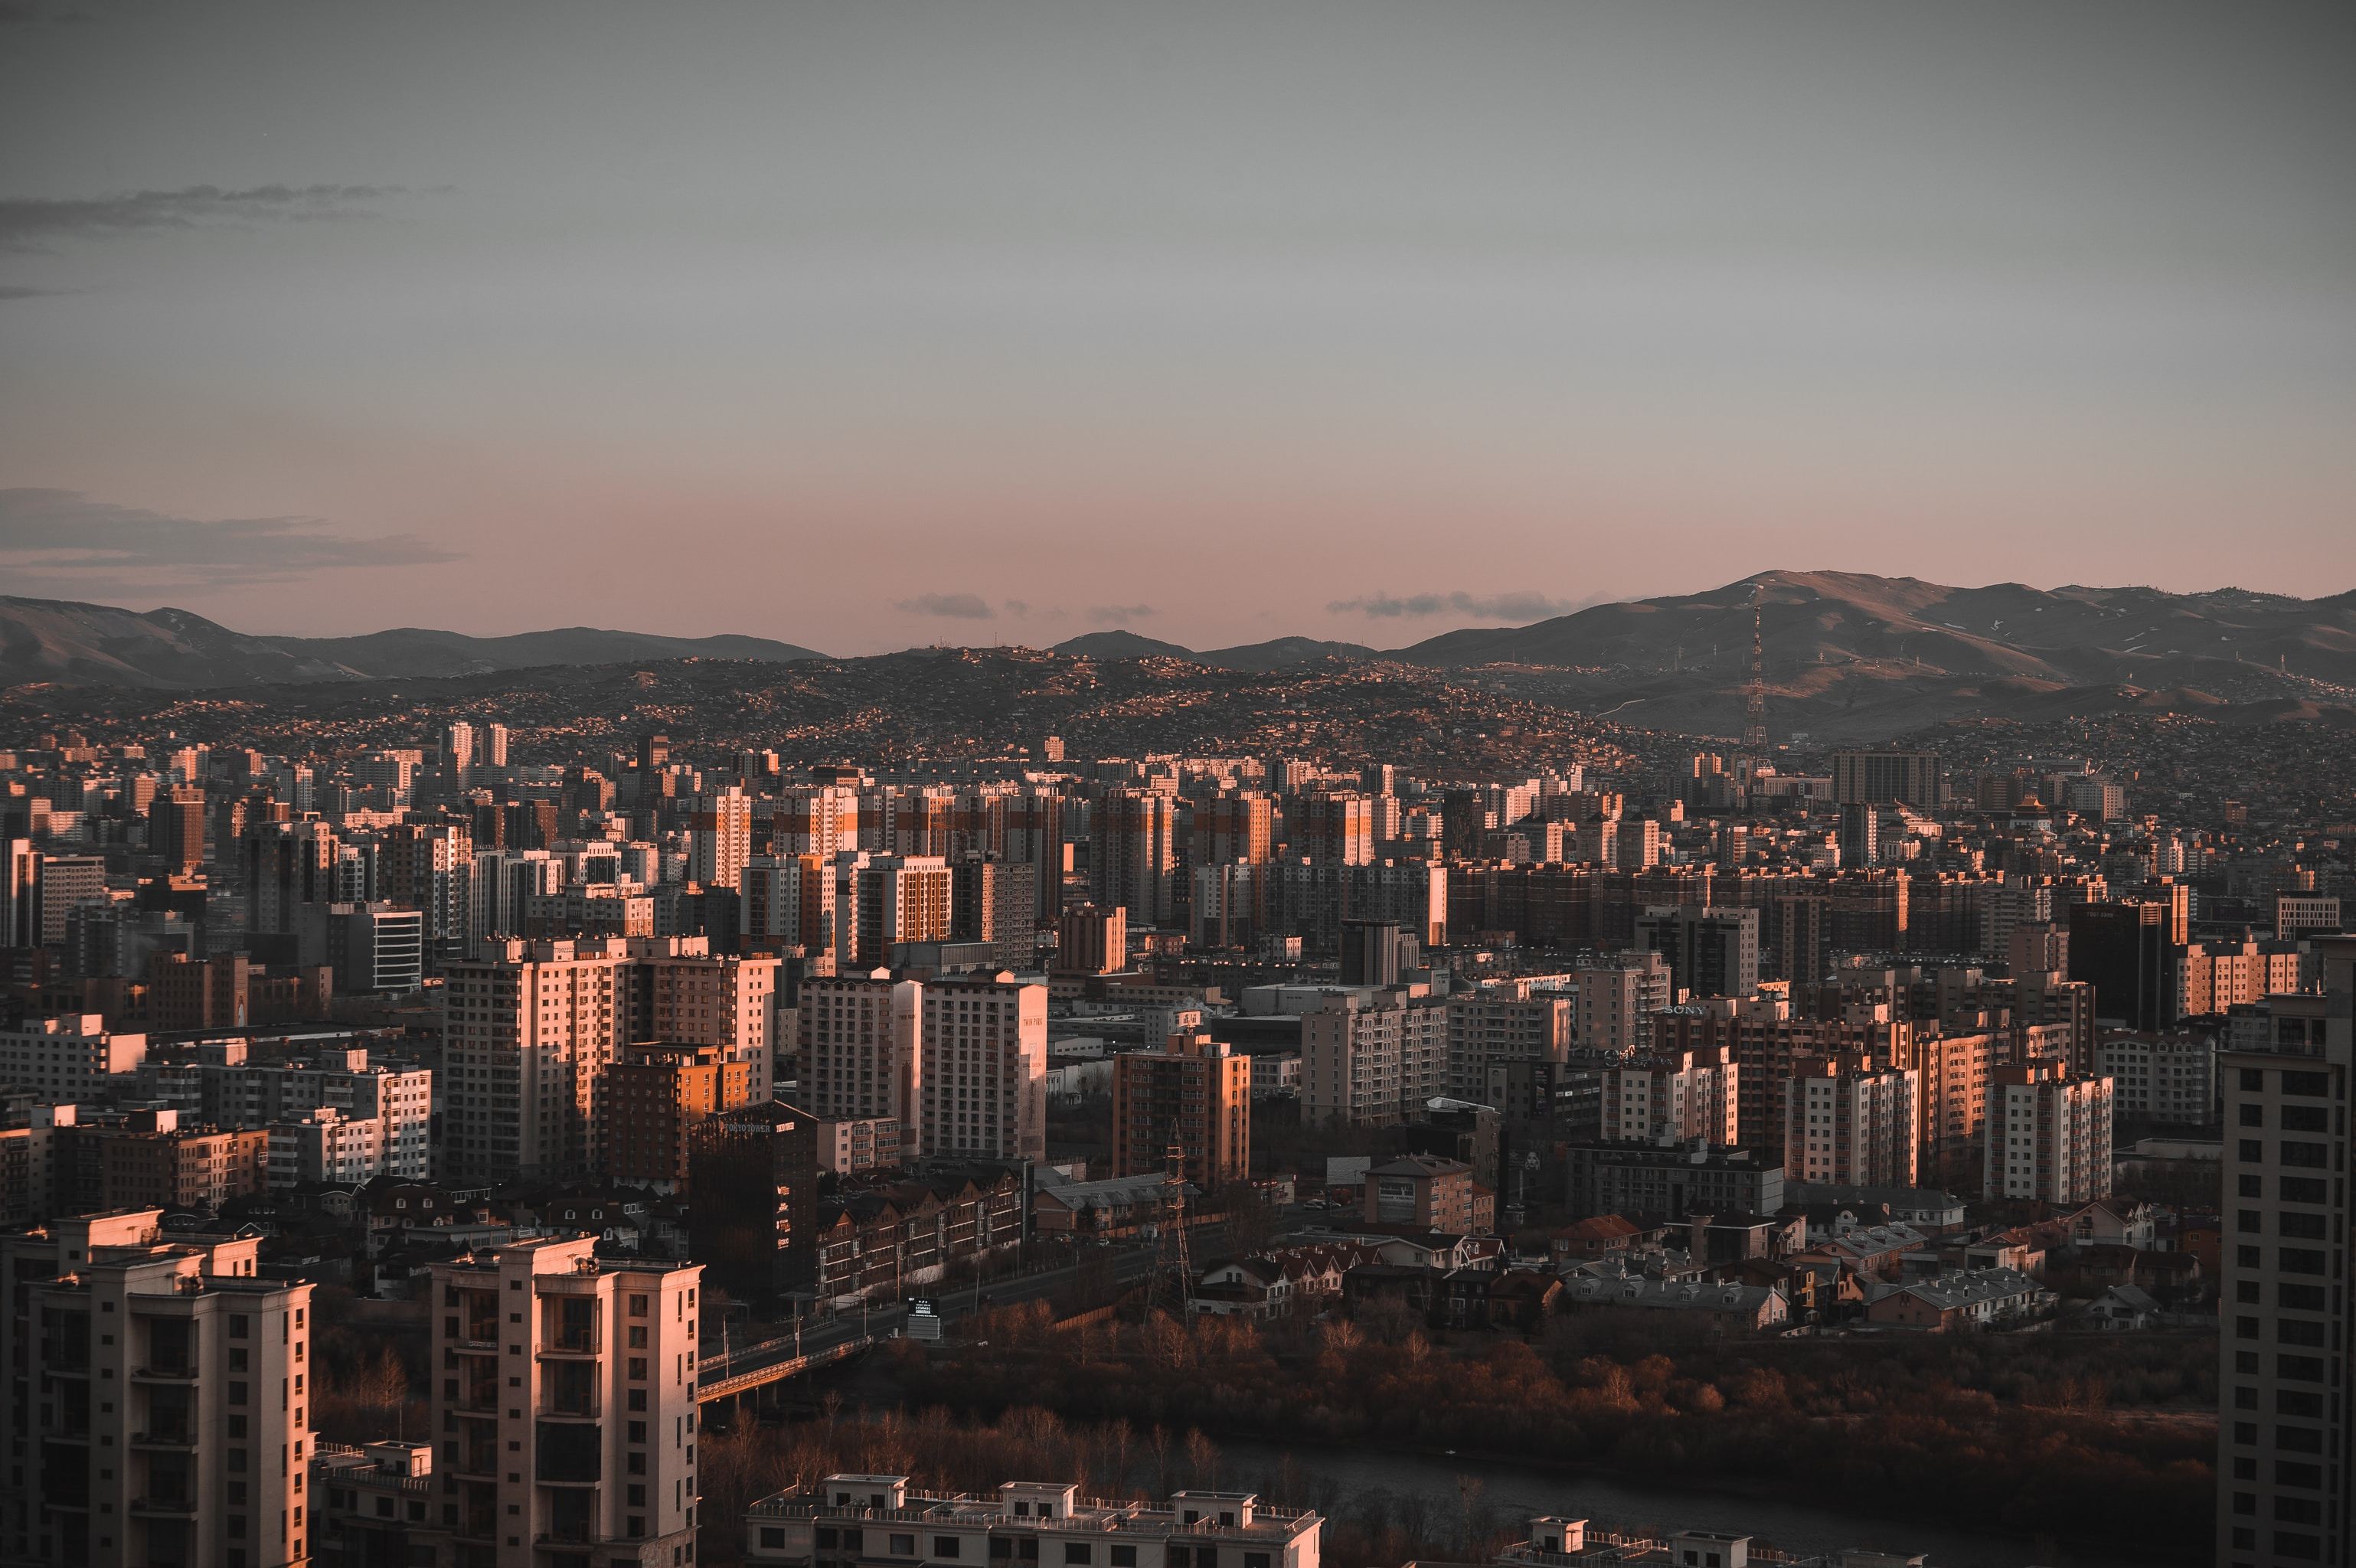 Aerial view of Ulaanbaatar, Source: Photo by Uudam on Unsplash